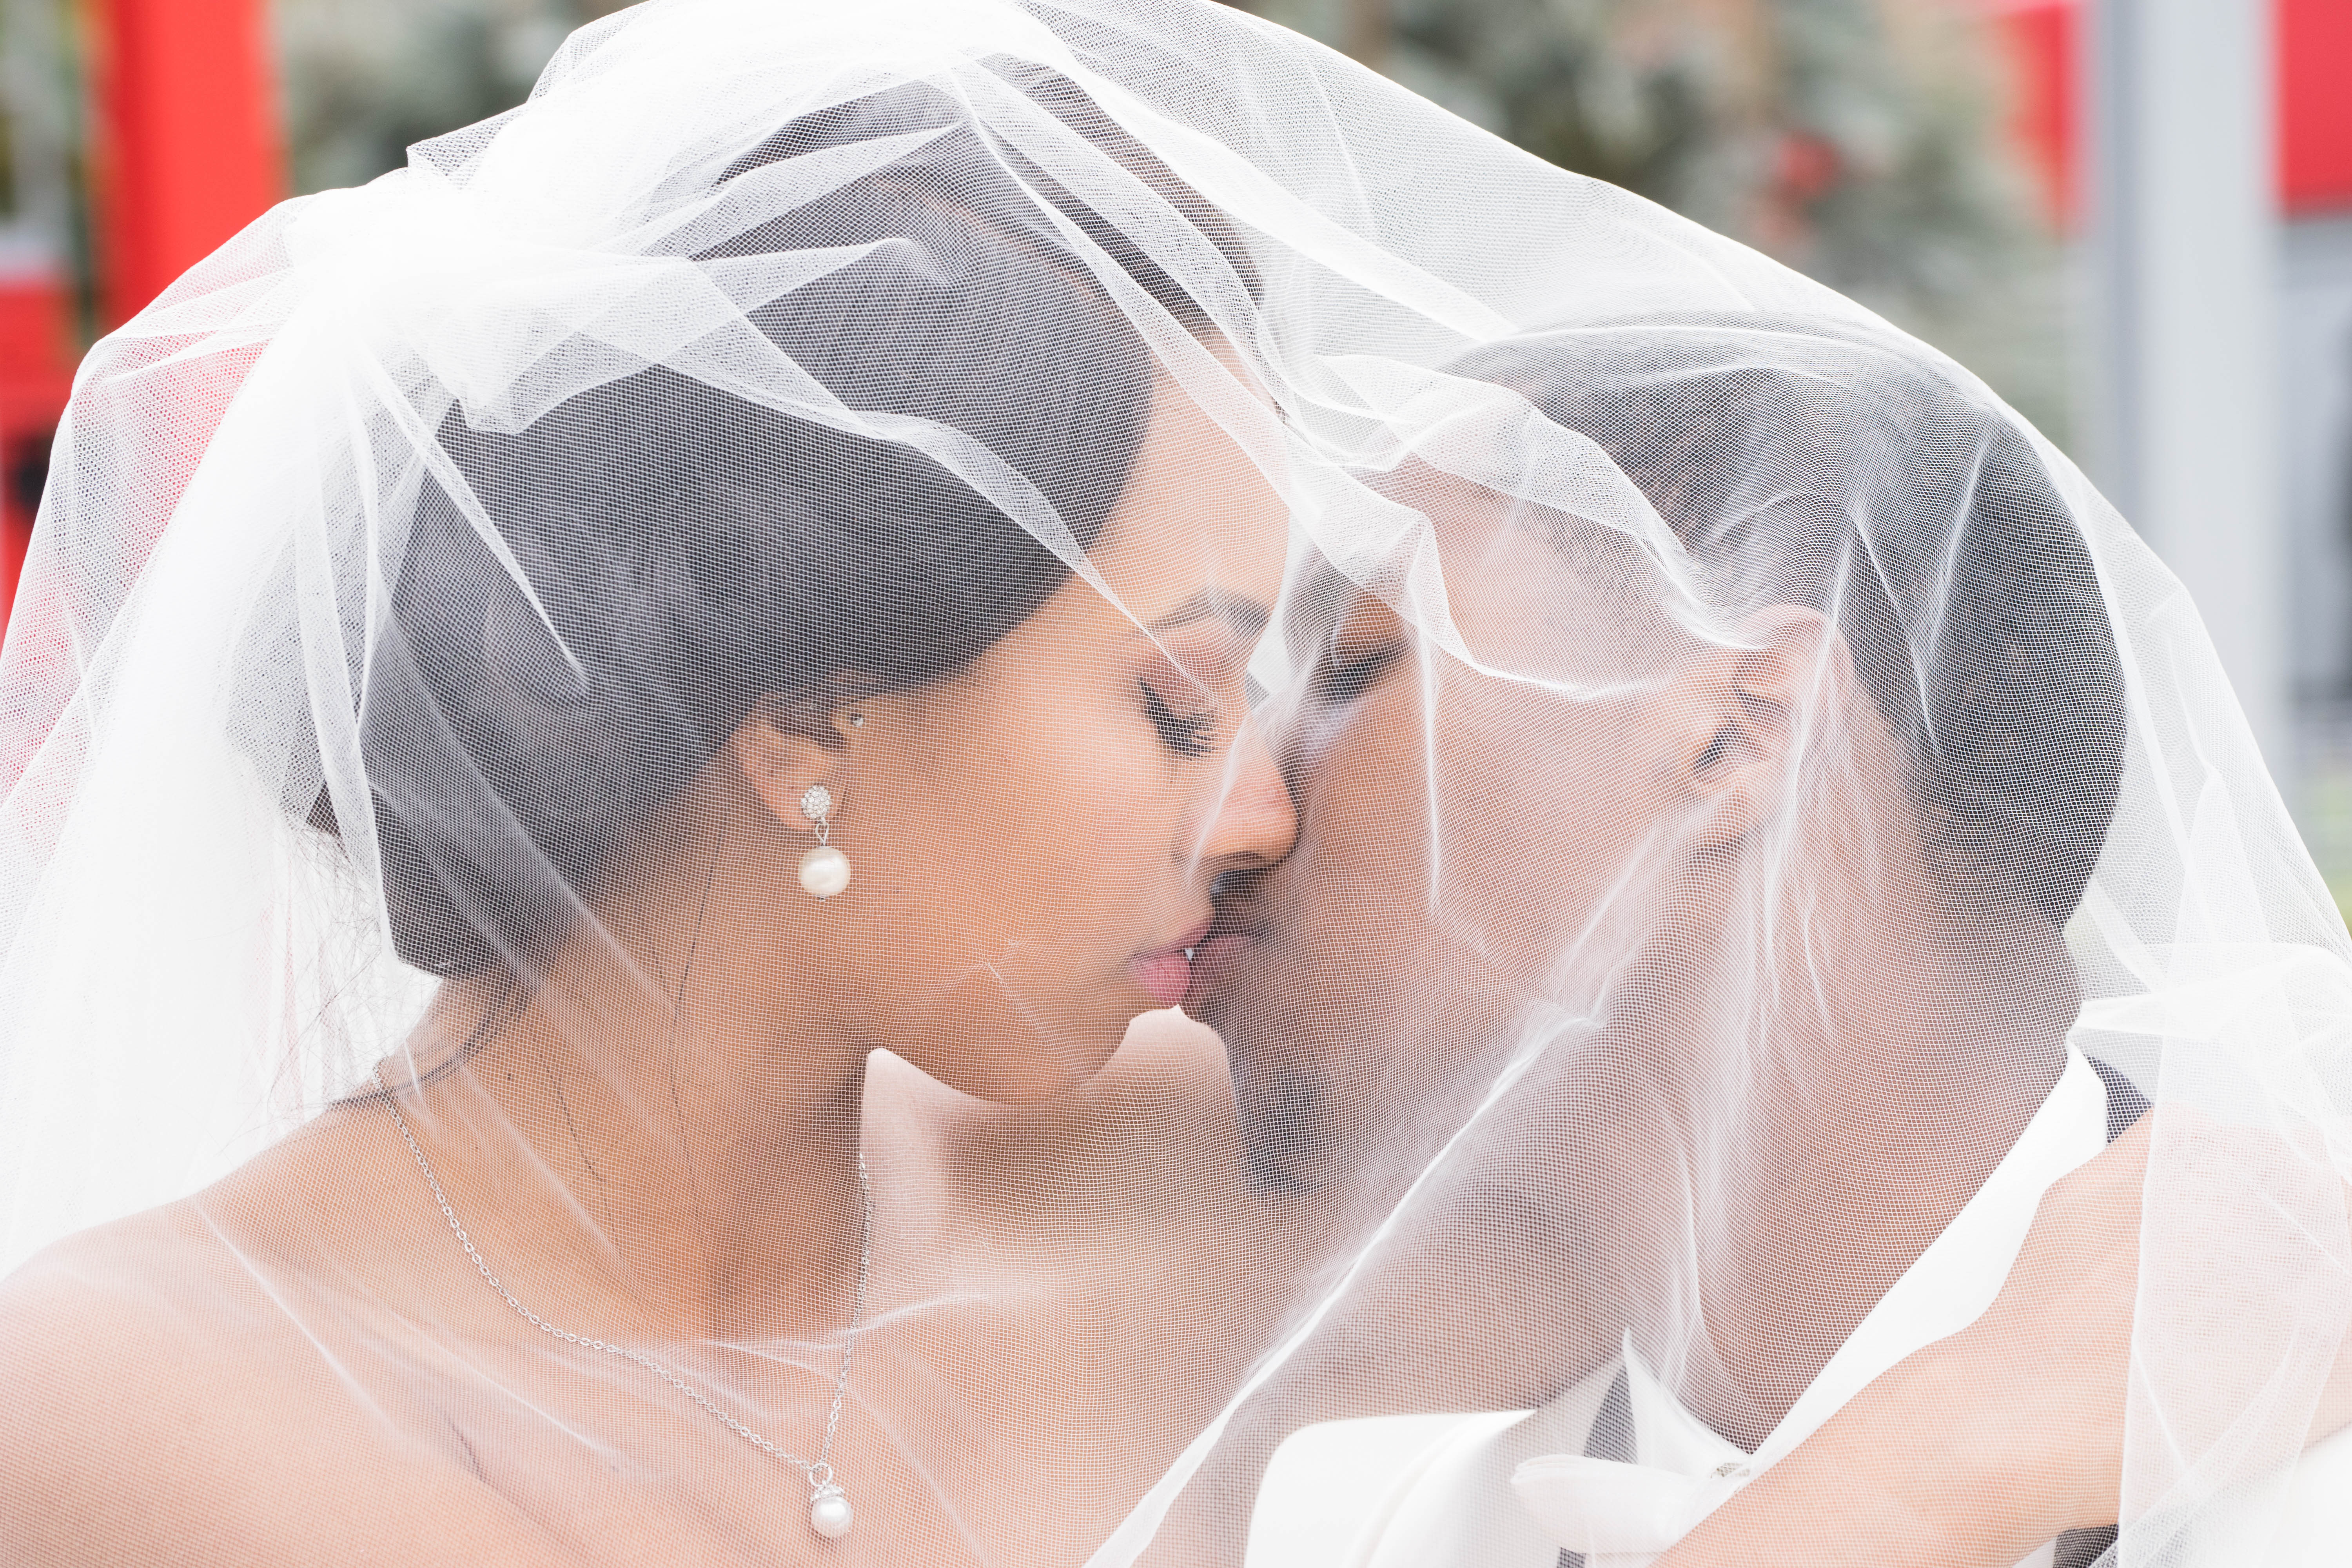 Bridal Bliss: Mekaela and Deven's Romantic Love Story Began On Twitter
